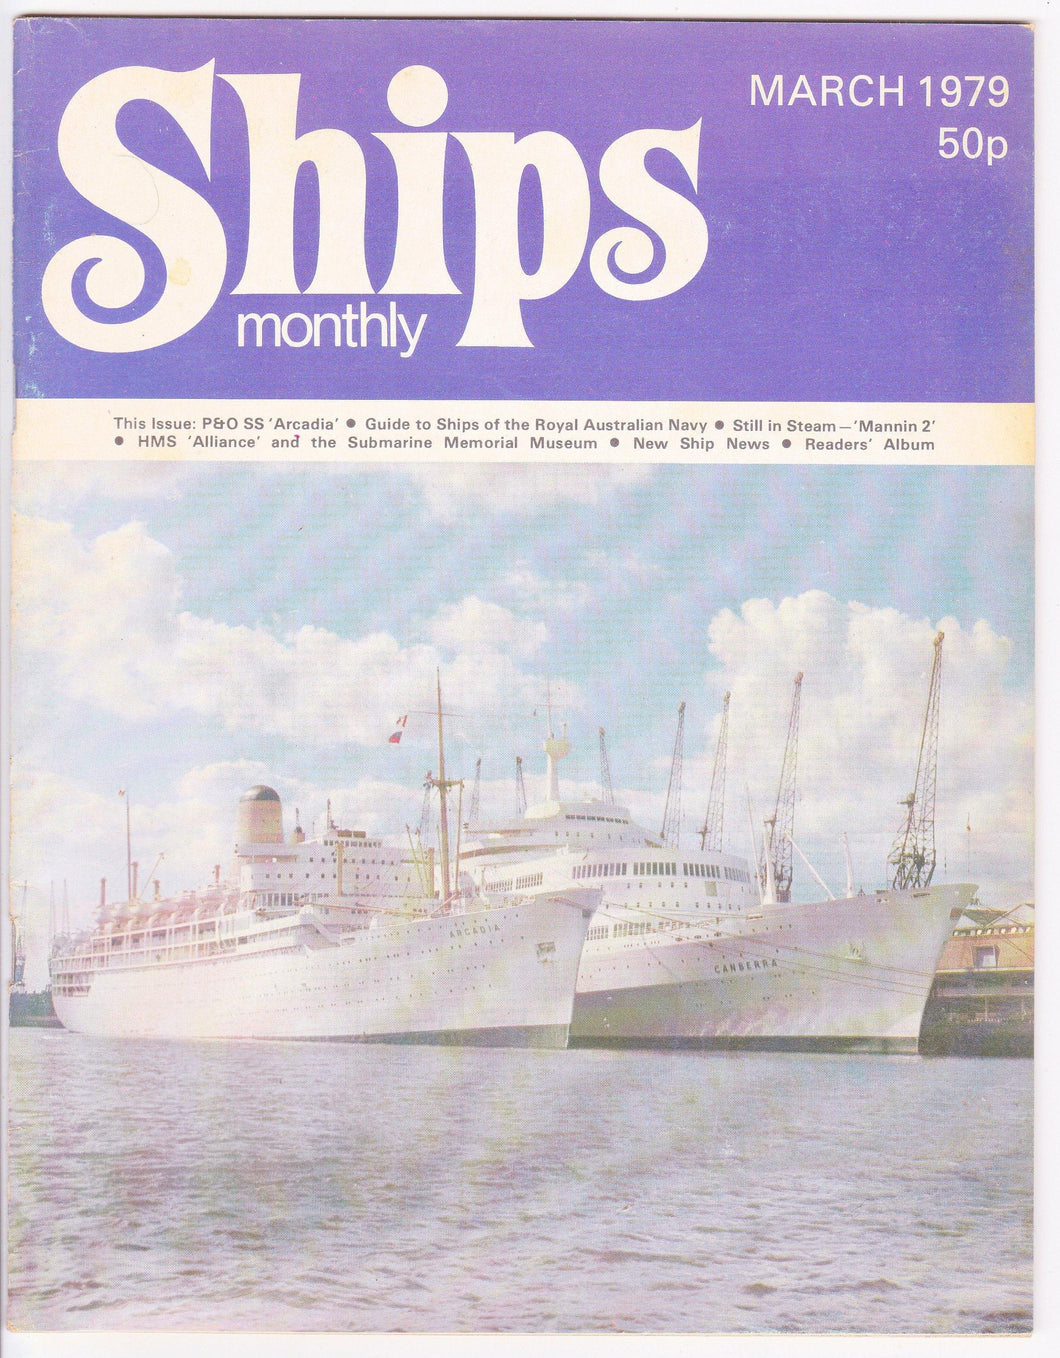 Ships Monthly Magazine March 1979 P&O ss Arcadia Royal Australian Navy HMS Alliance - TulipStuff